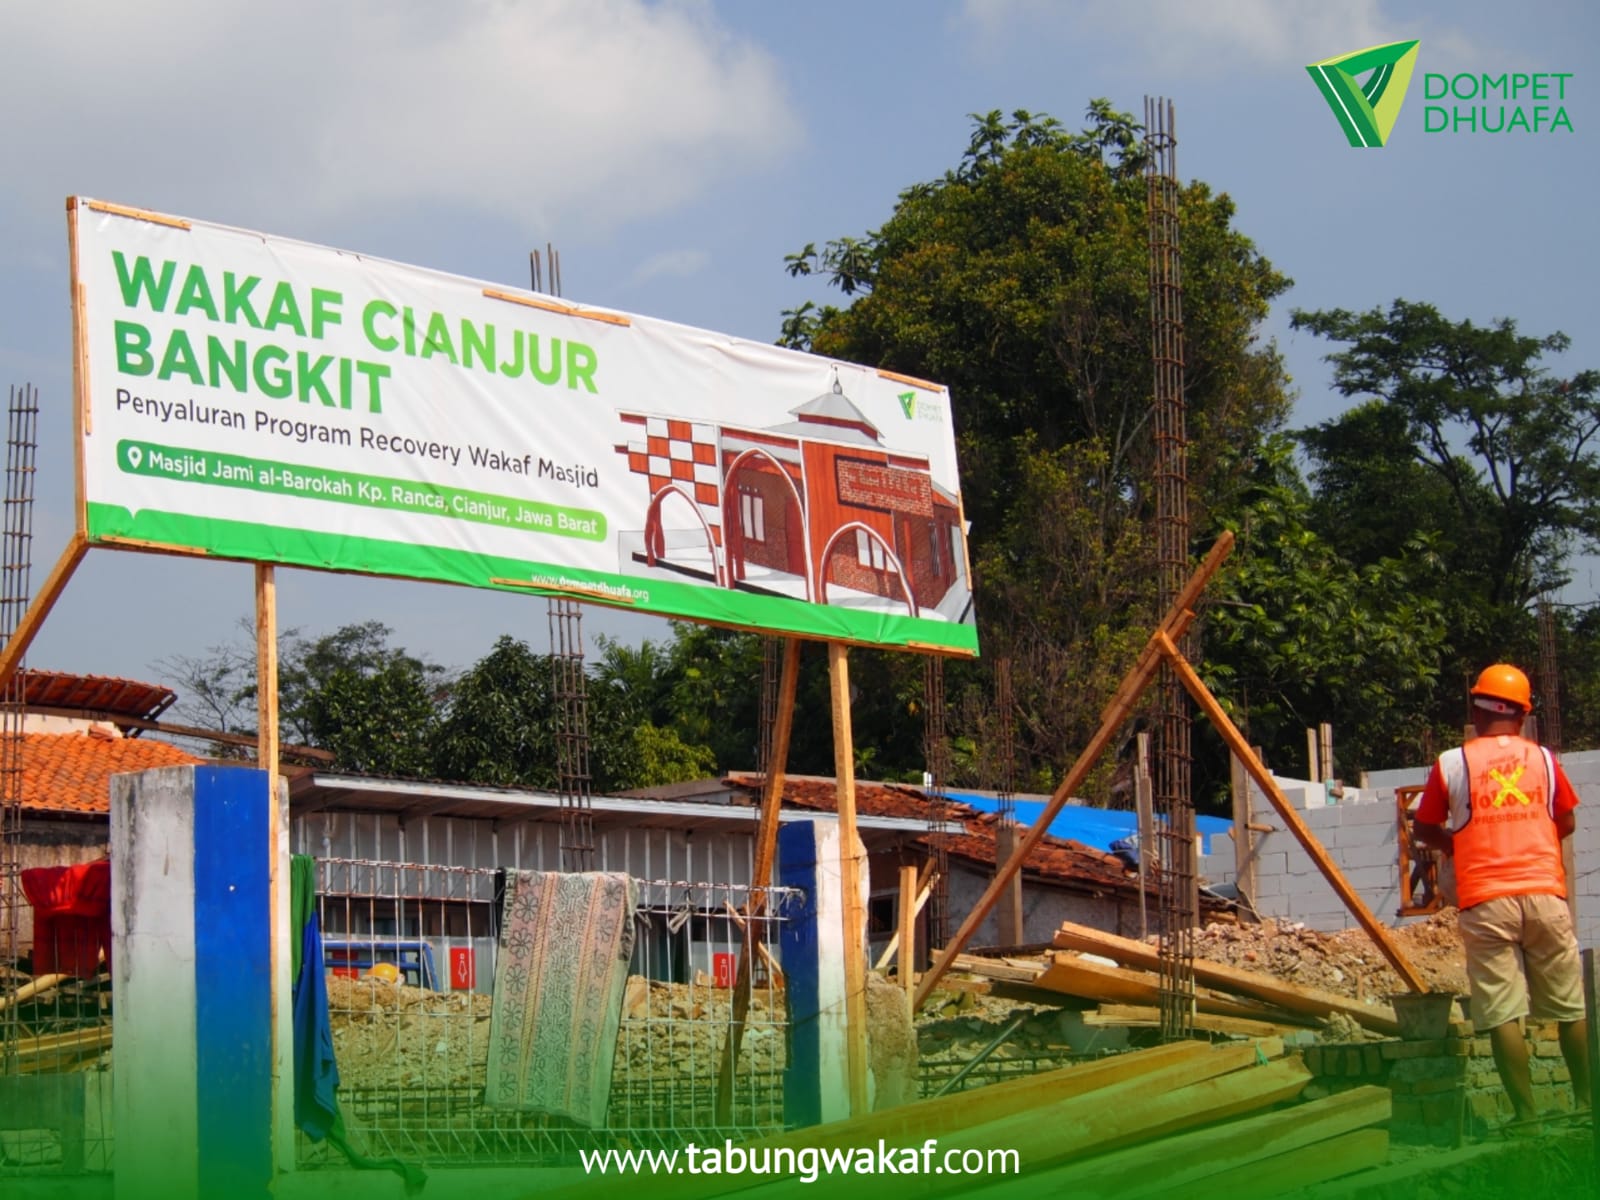 Wakaf Cianjur Bangkit, Program Recovery Wakaf Masjid